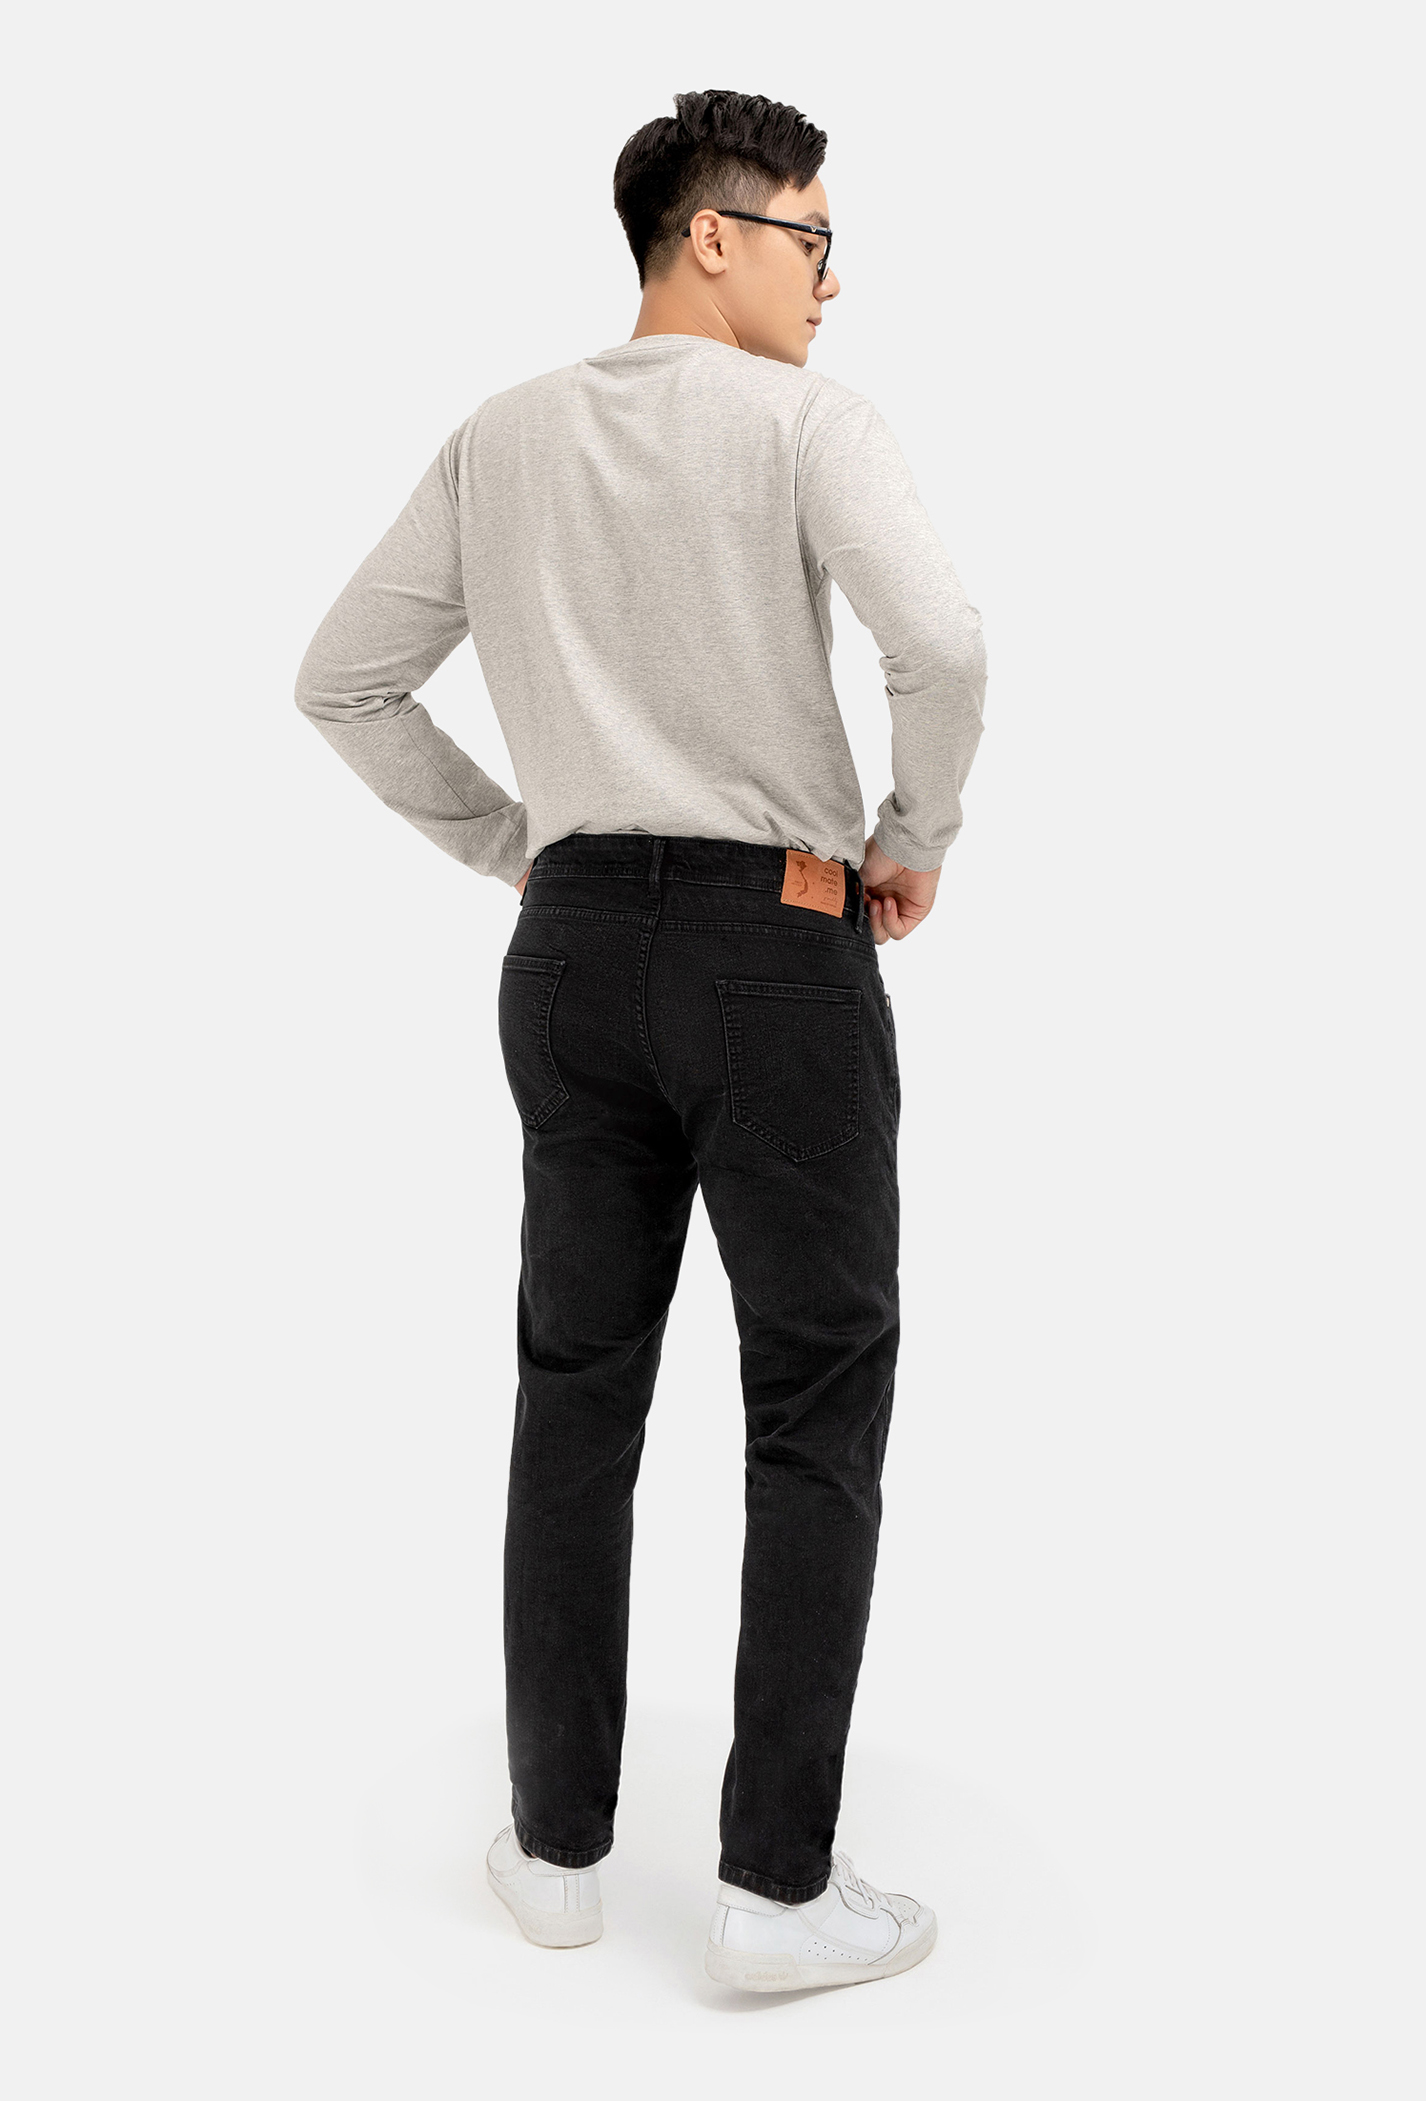 SĂN DEAL - Quần Jeans Basic Slim  Đen 2